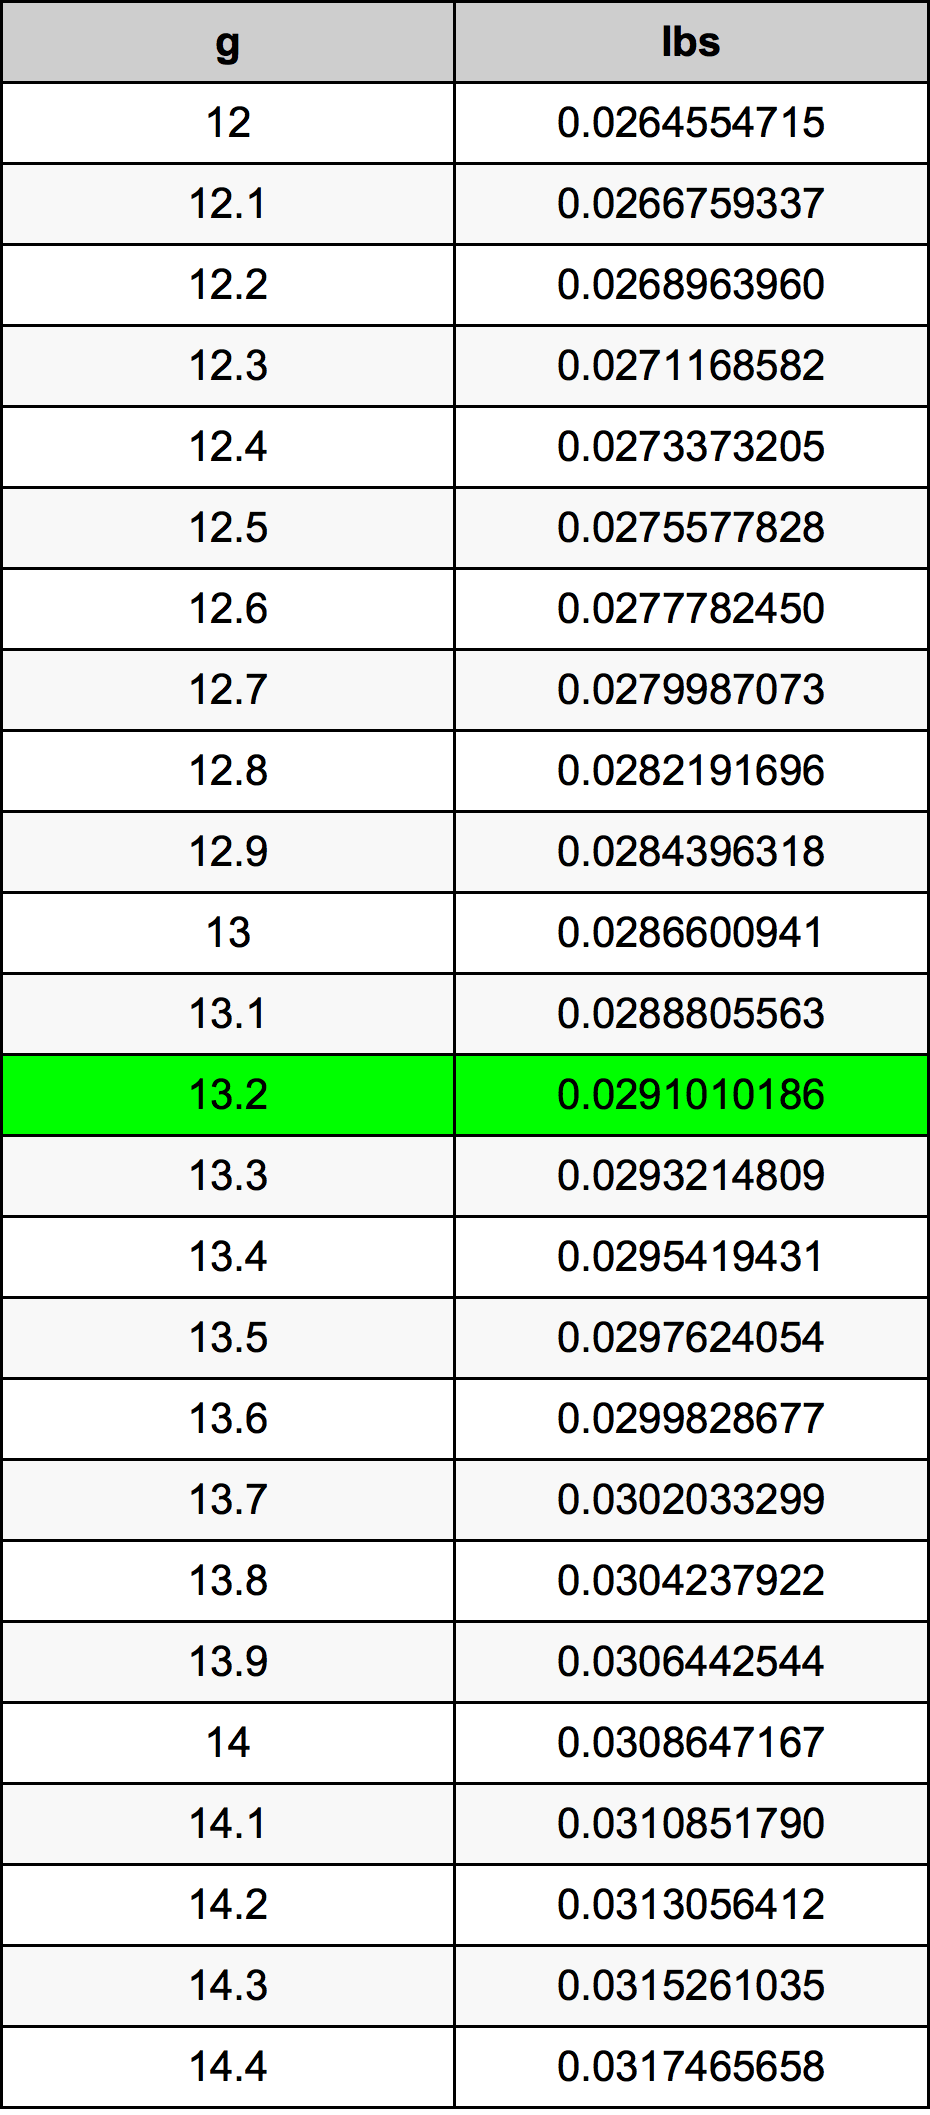 13.2 غرام جدول تحويل